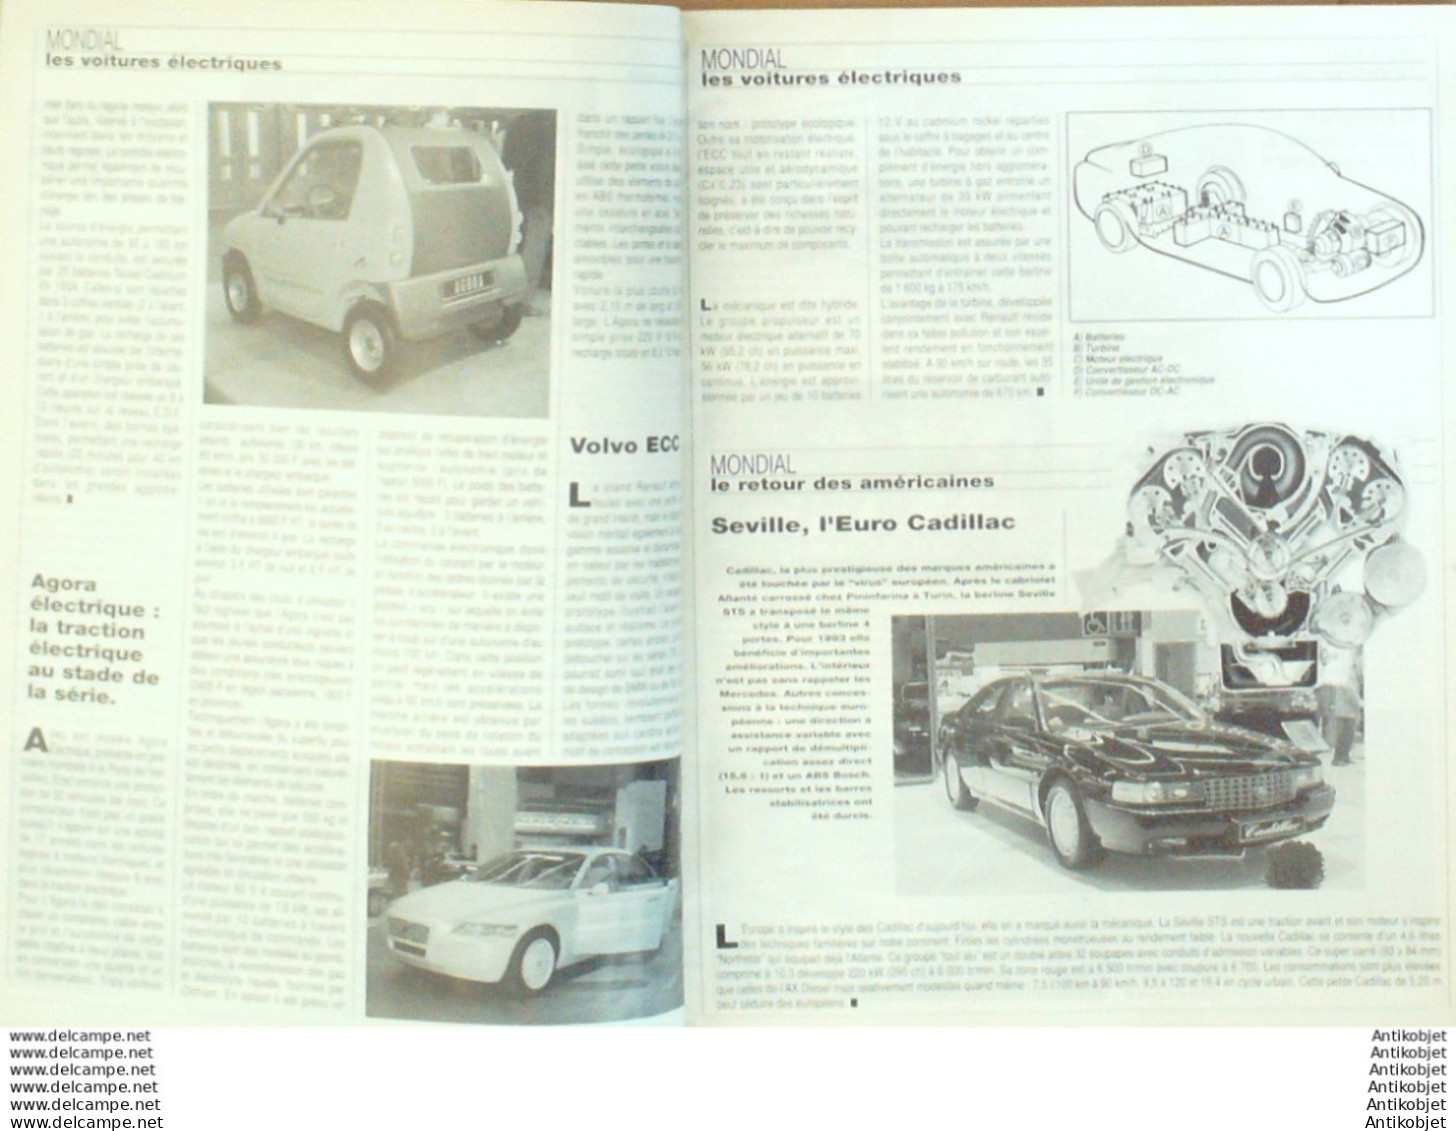 Revue Technique Automobile Nissan Primera Safrane Austin Peugeot 405   N°545 - Auto/Motorrad